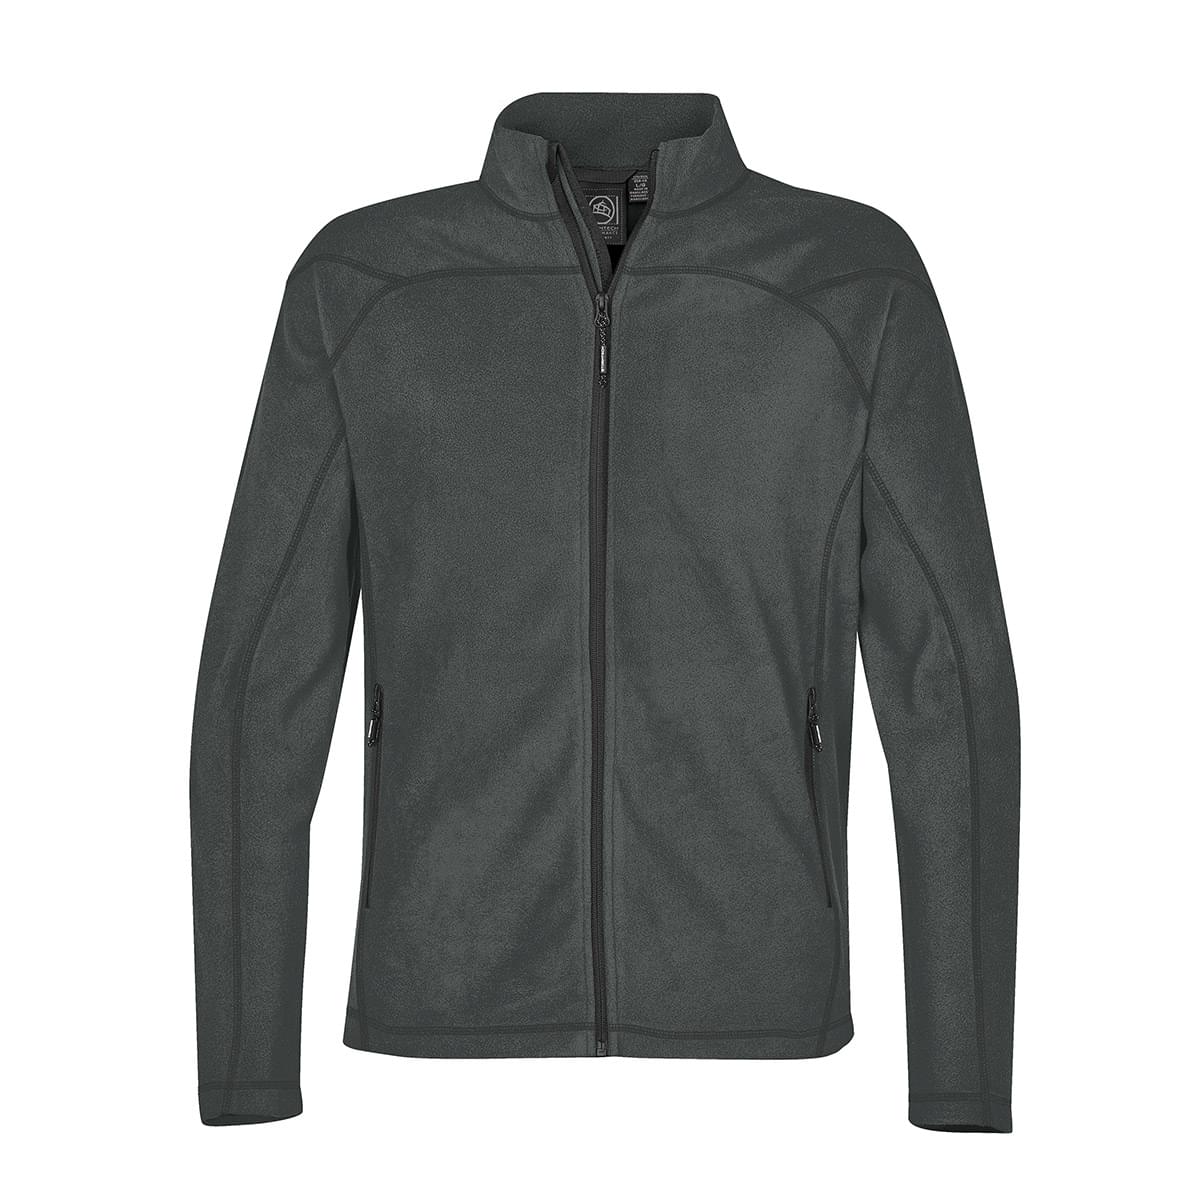 AND WANDER Shell-Trimmed Polartec® Fleece Jacket for Men